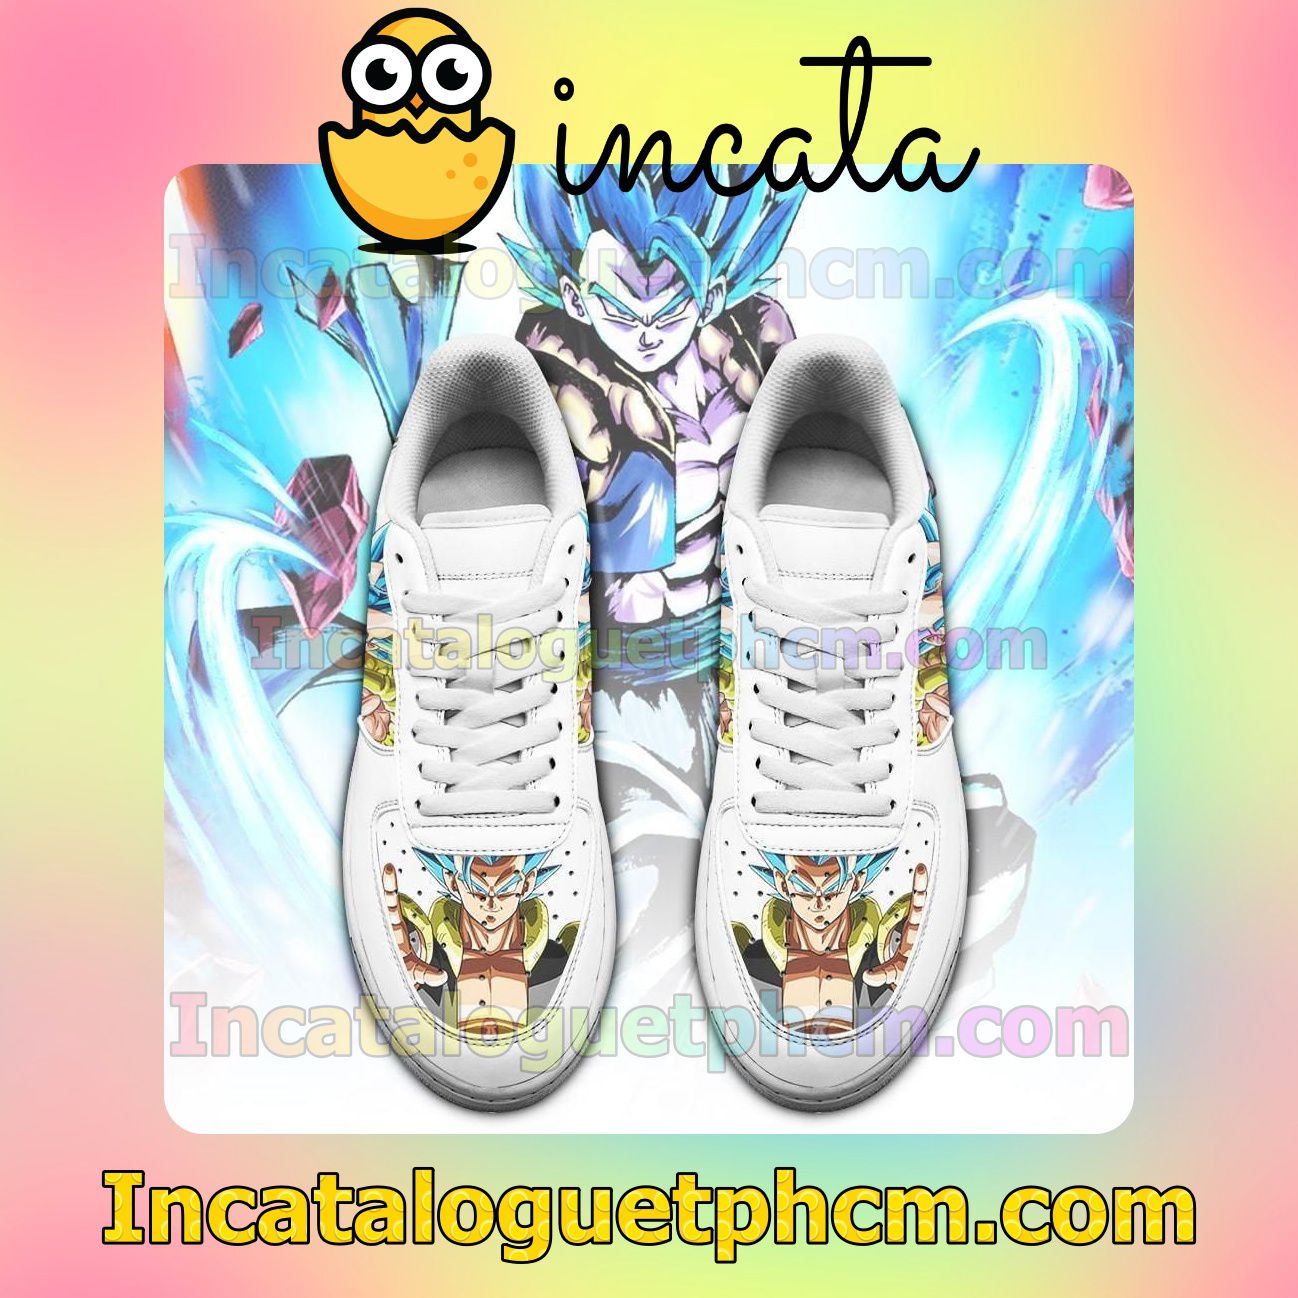 Great artwork! Gogeta Dragon Ball Z Anime Nike Low Shoes Sneakers